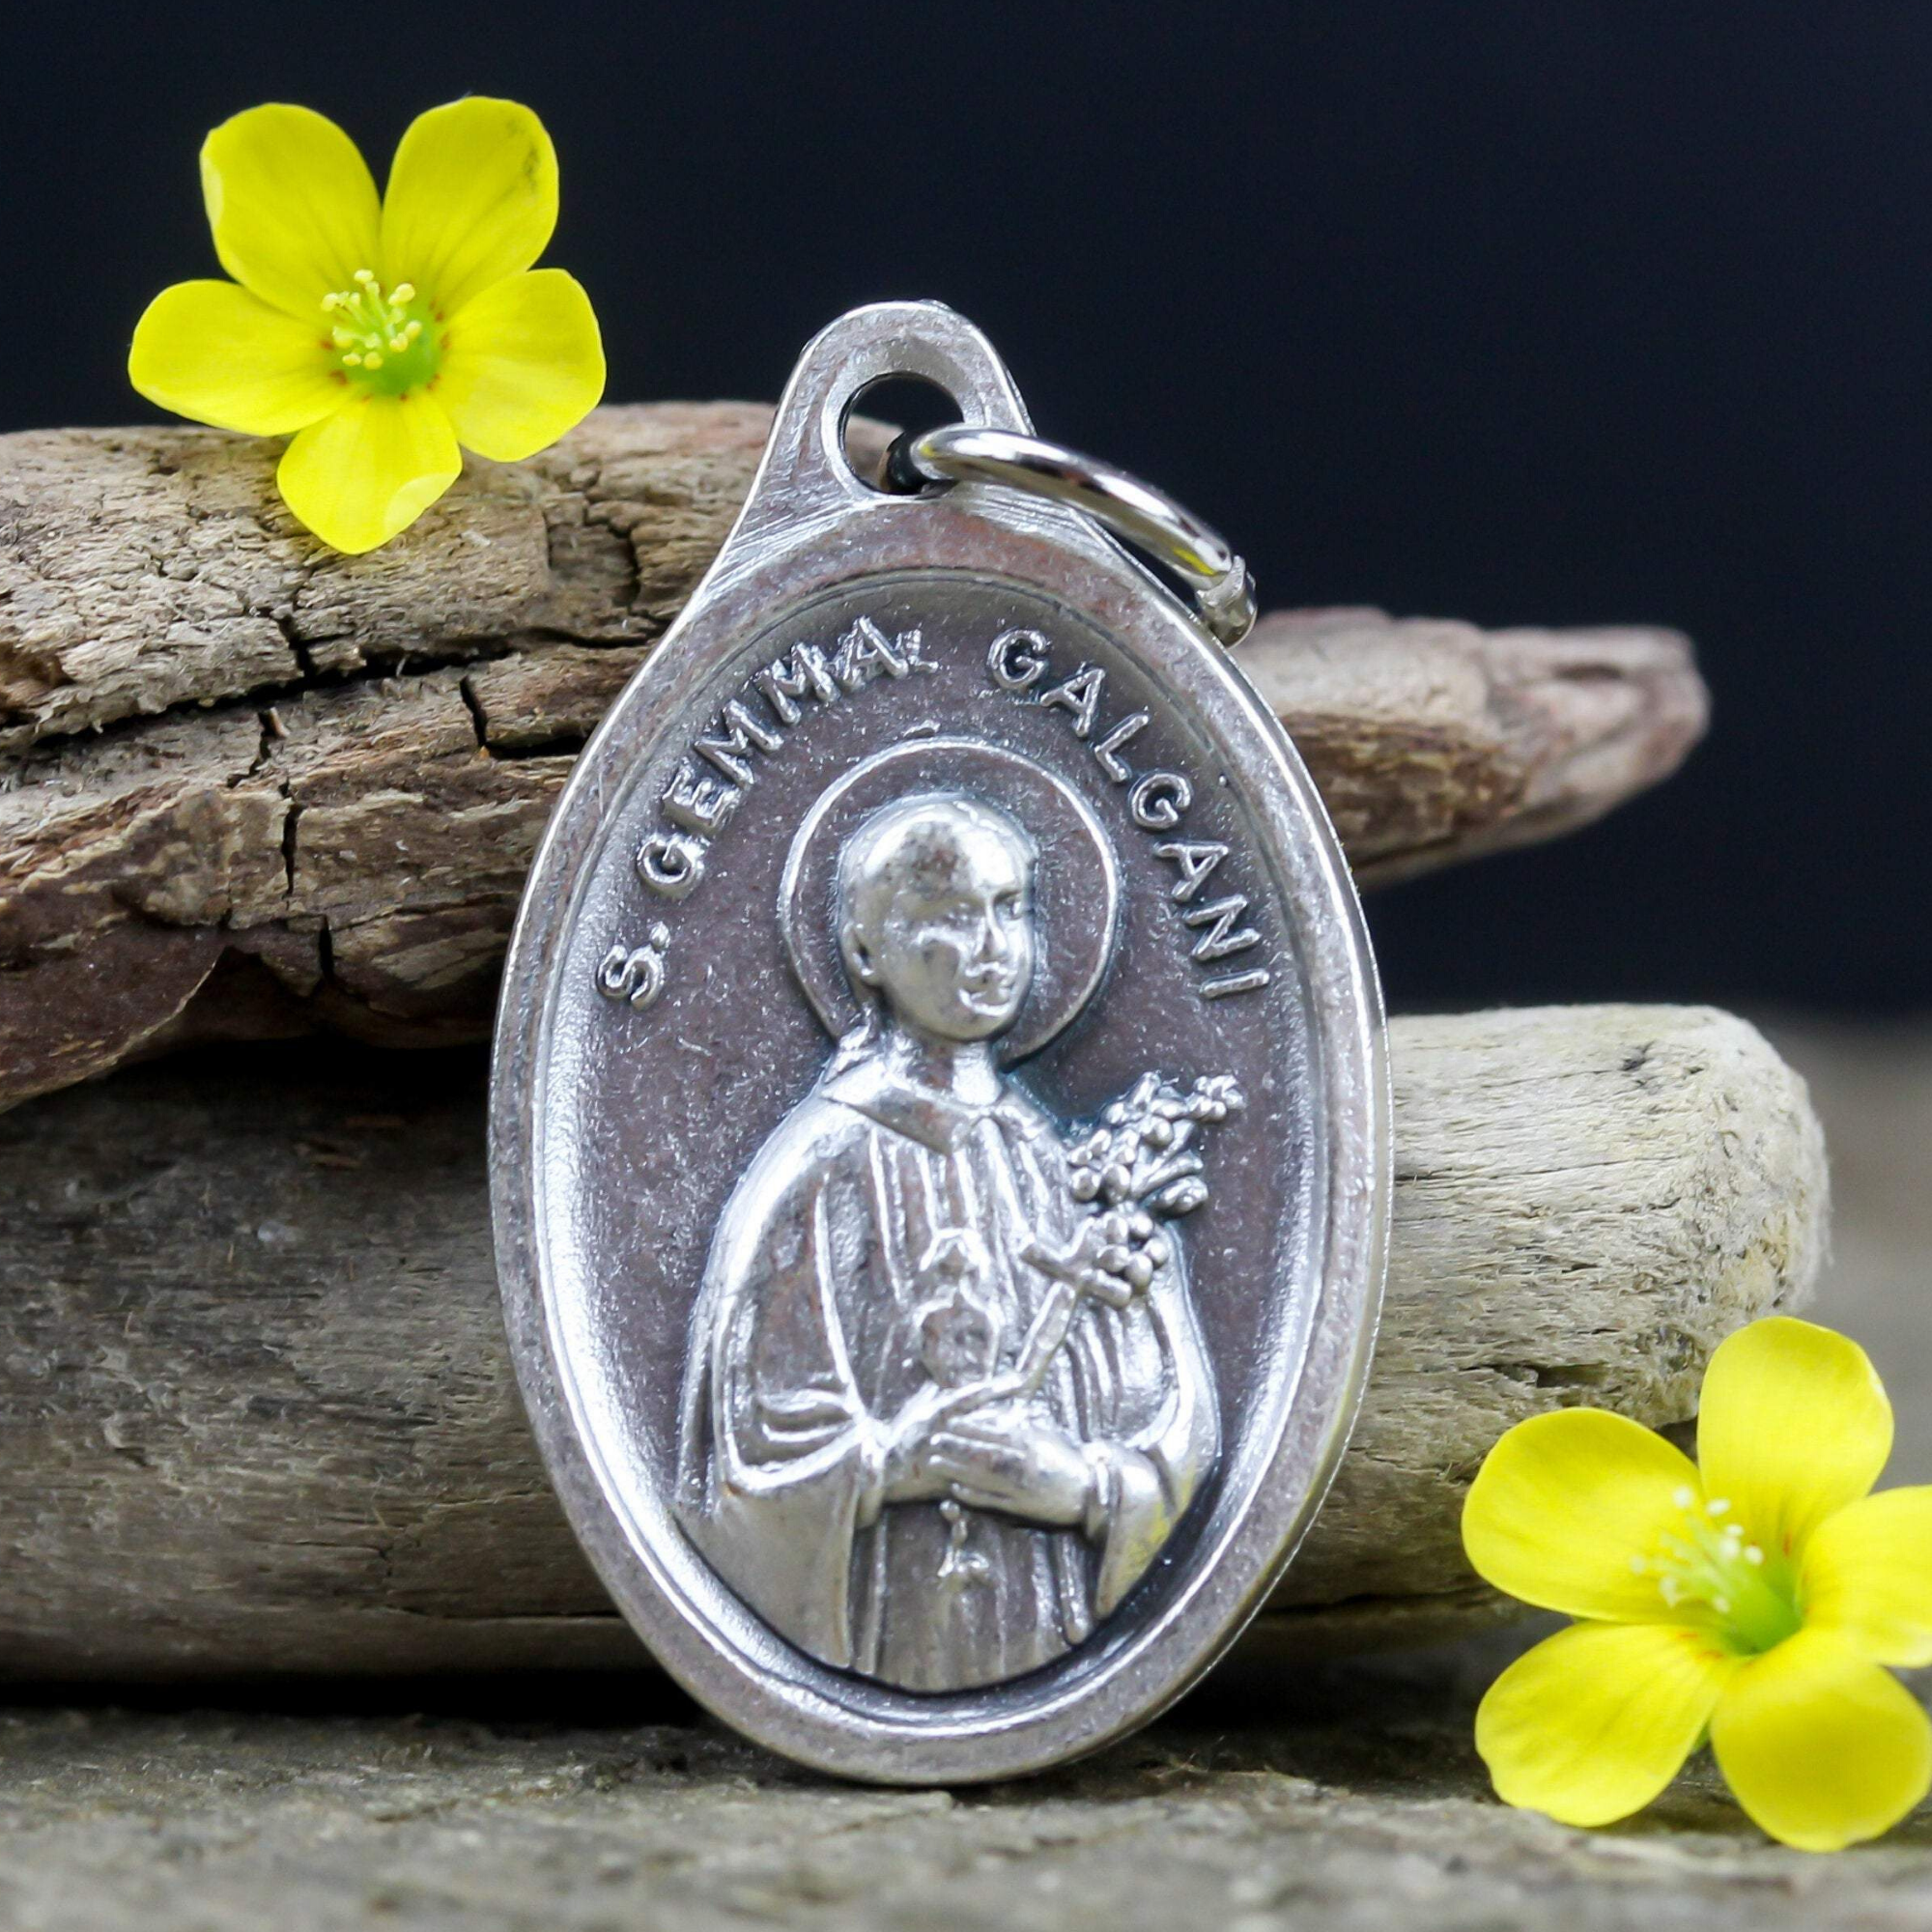 die cast silver medal depicting saint gemma galgani